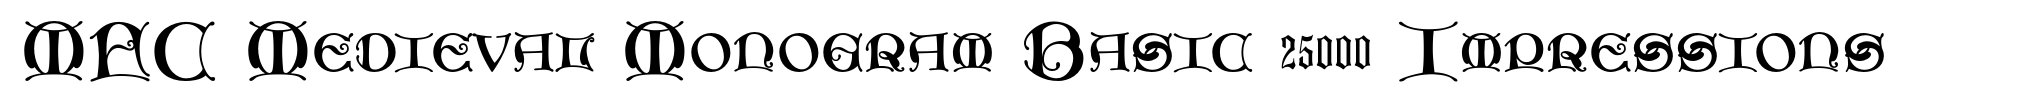 MFC Medieval Monogram Basic 25000 Impressions image